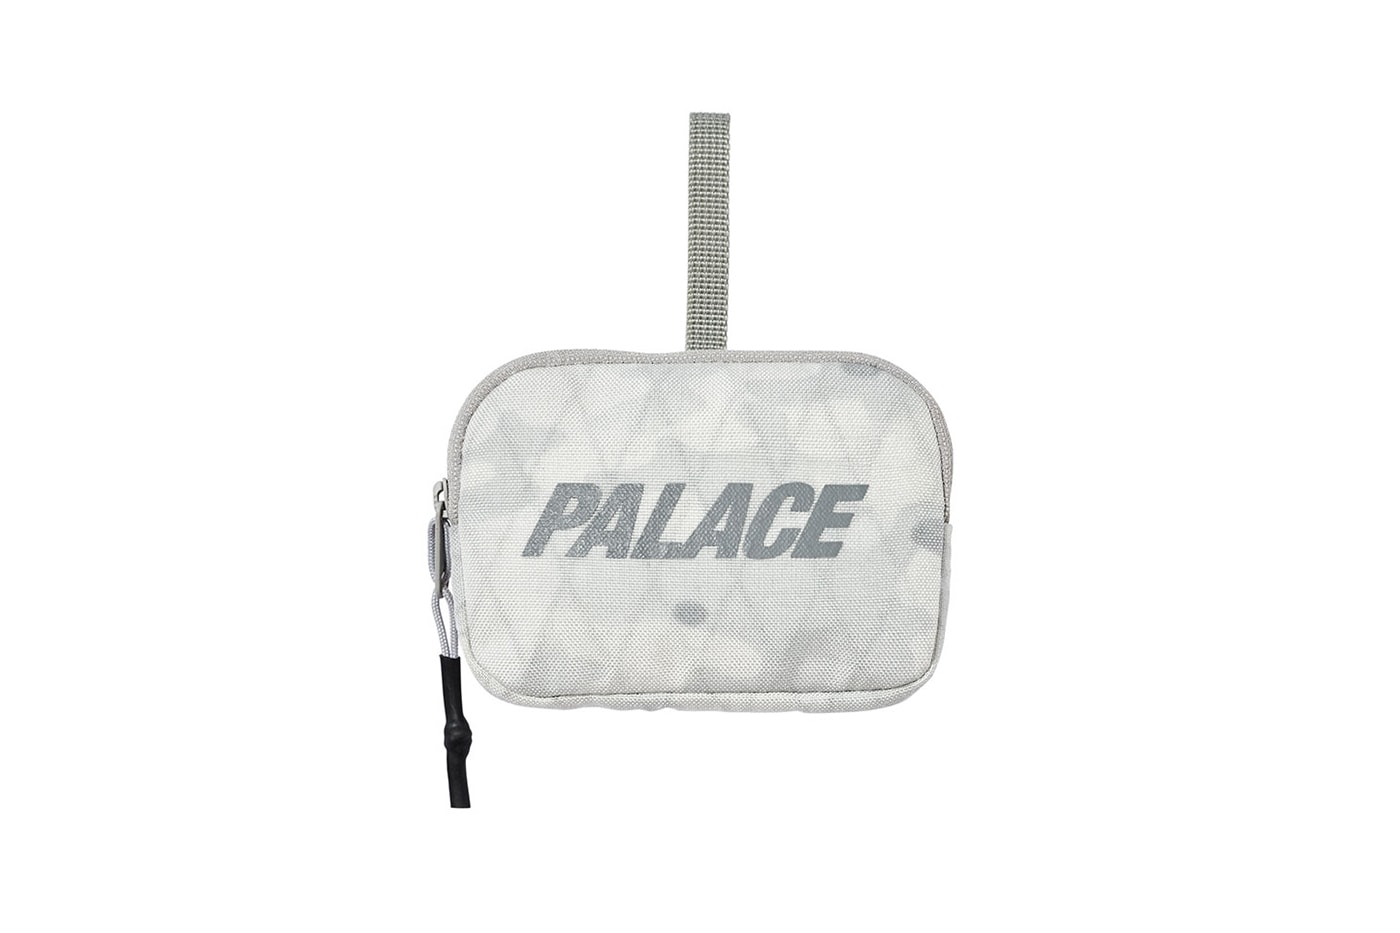 Palace Autumn 2019 Accessories & Hardware